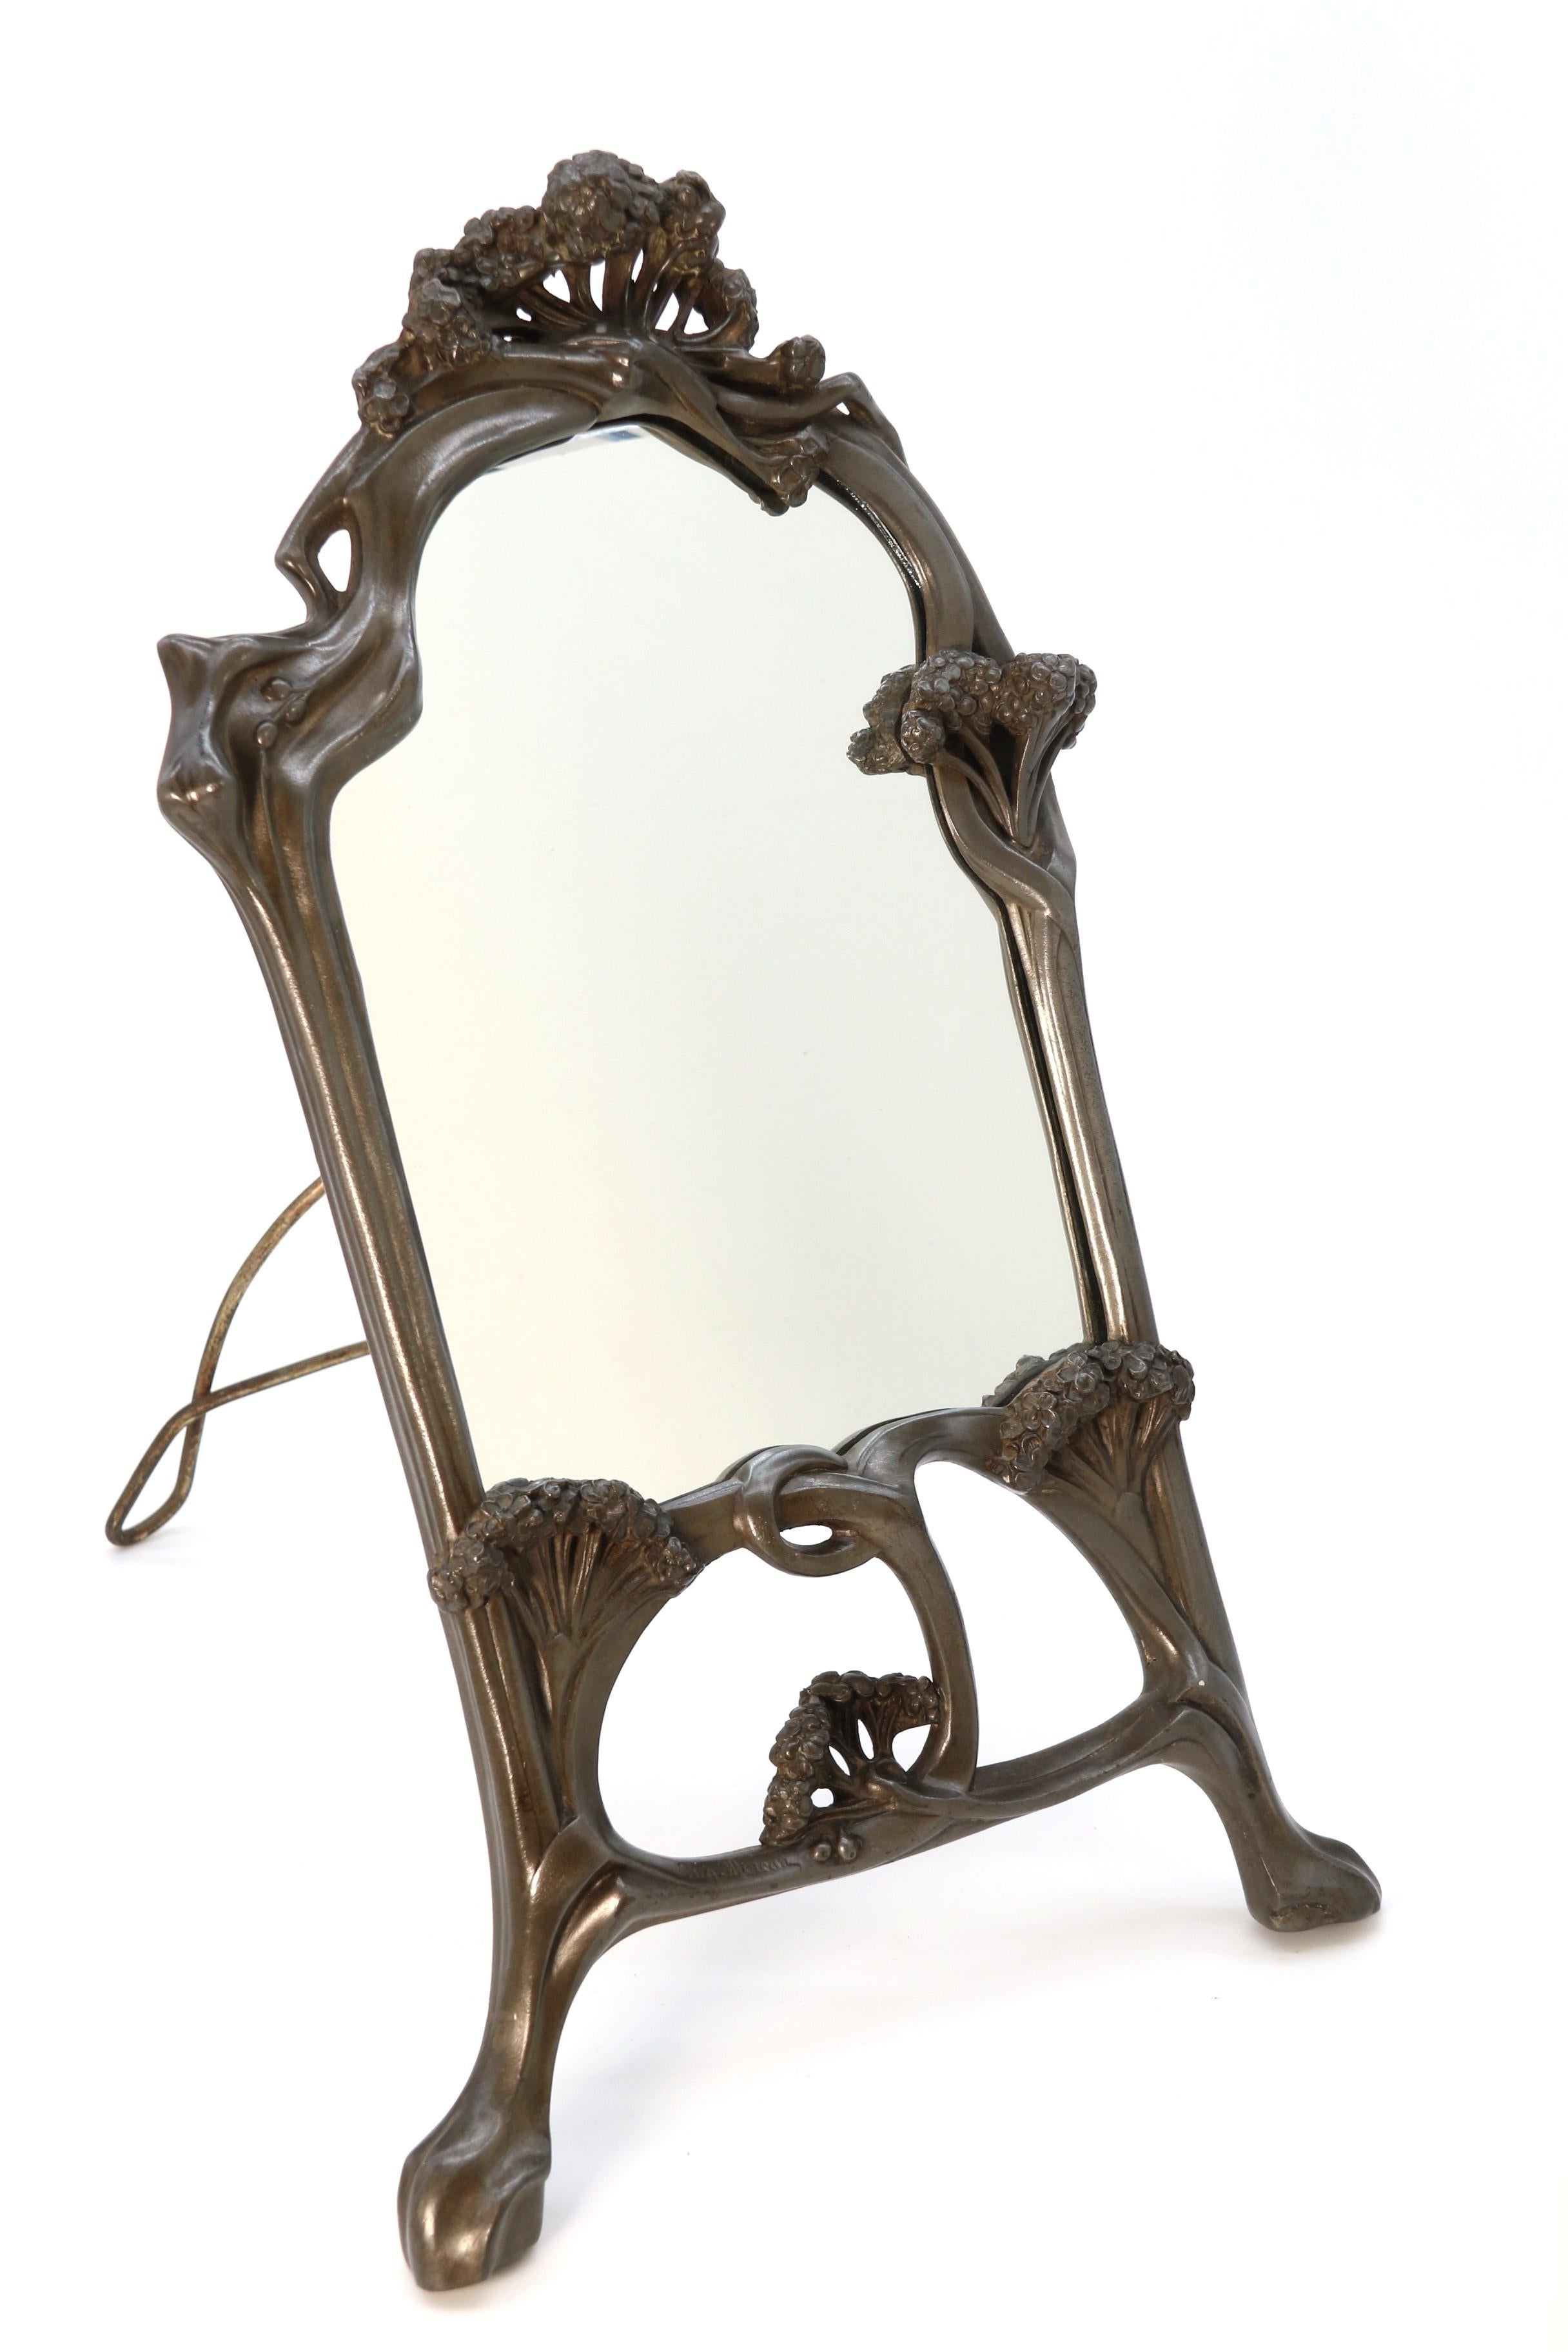 An Art Nouveau mirror by the French 19th century sculptor Louis Auguste Moreau. For Sale 10